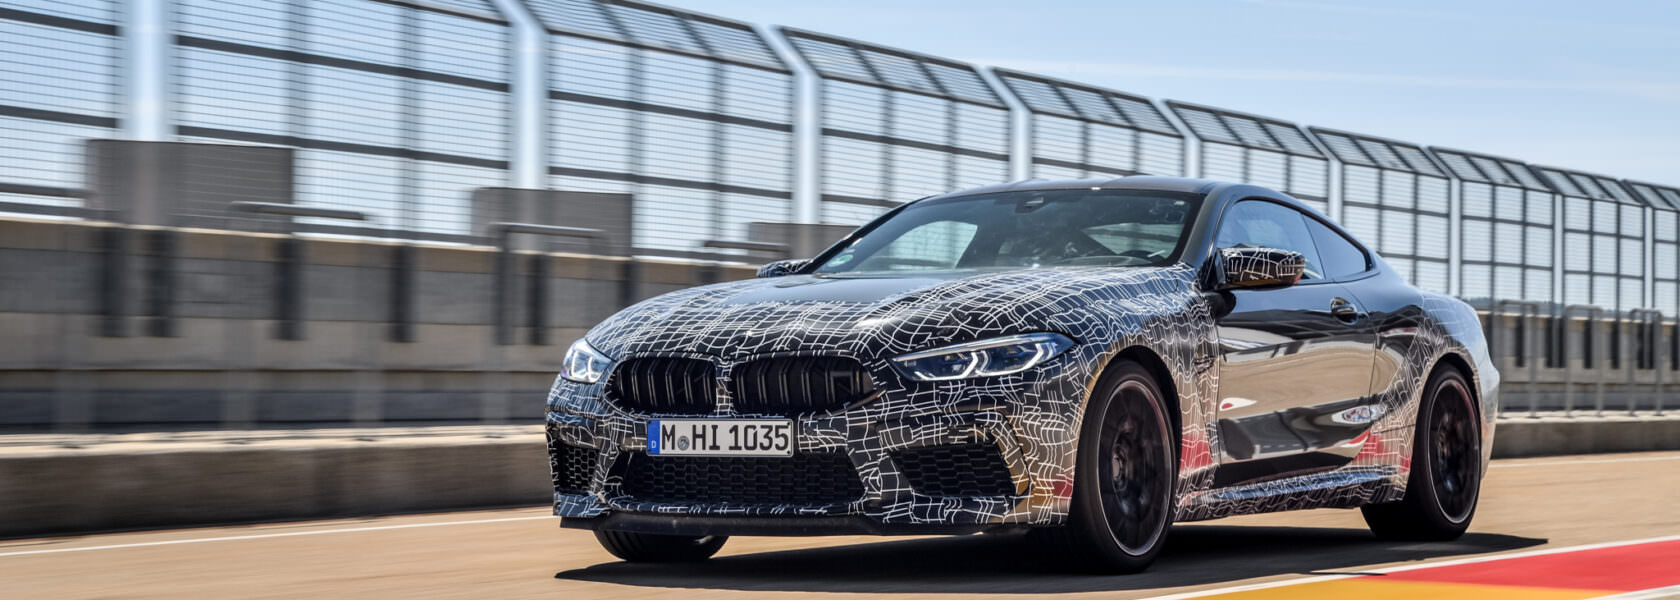 BMW M8 teasing 2019